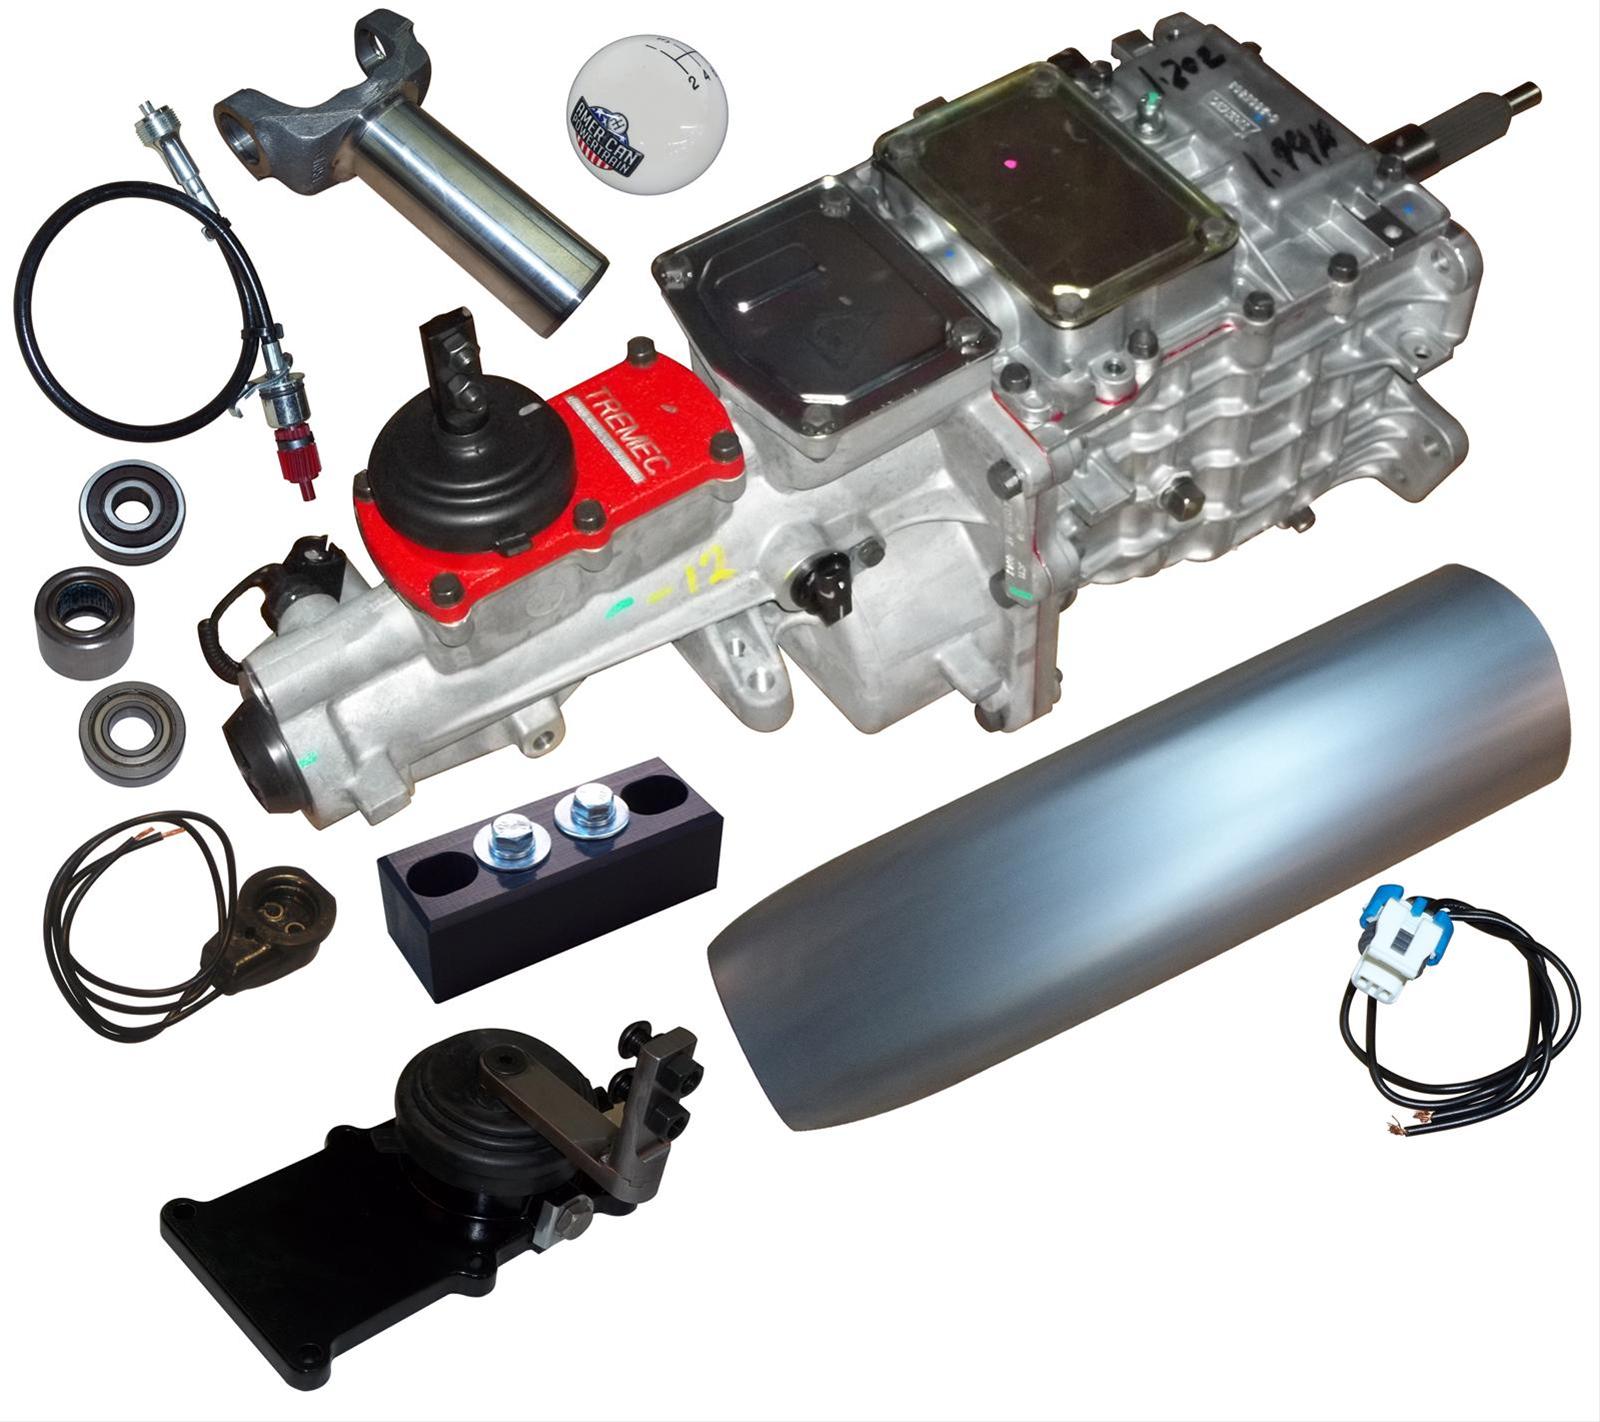 Фиат 600.трансмиссия. [F5] 5-Speed manual Trans. Gmt800 Powertrain. RLS transmission Kits. Install kit